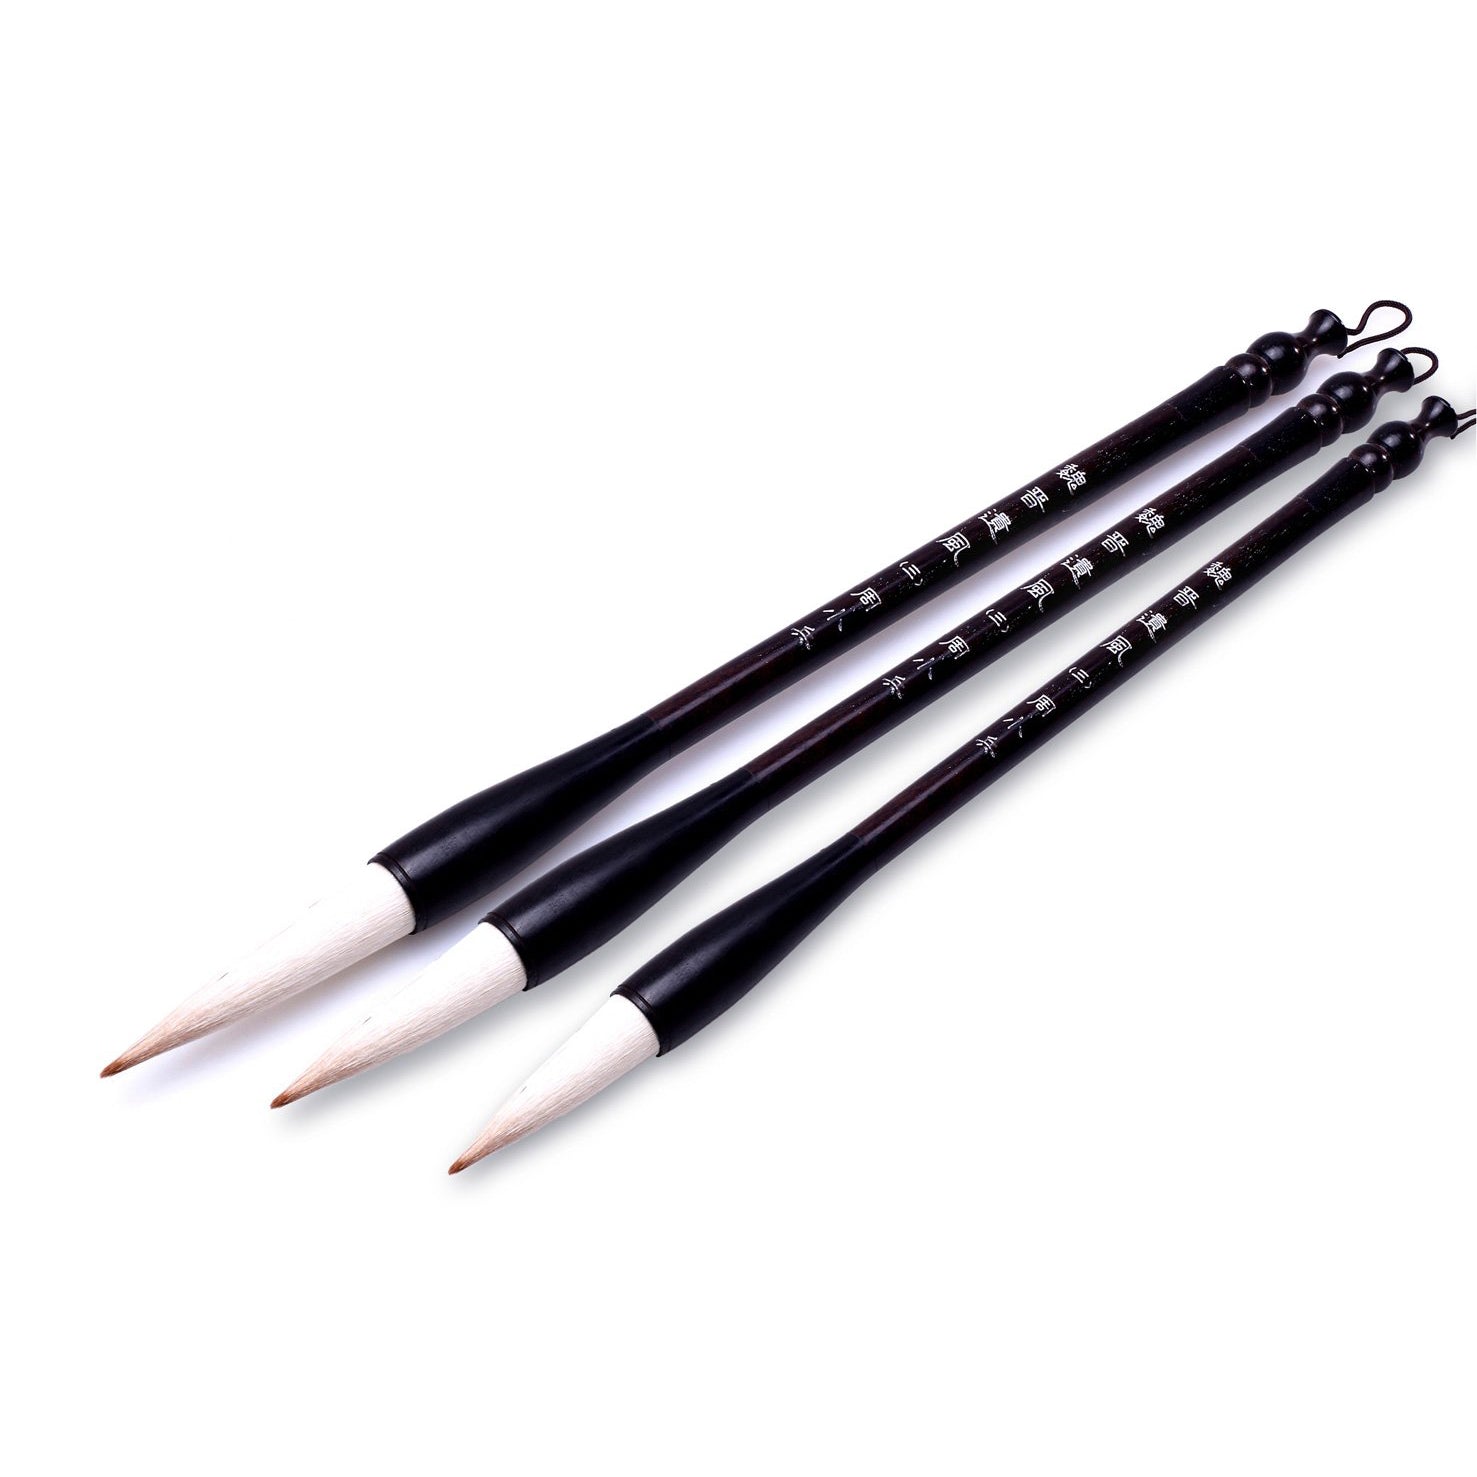  SEWACC 1 Set Lettering Brushes Chinese Brush Pen